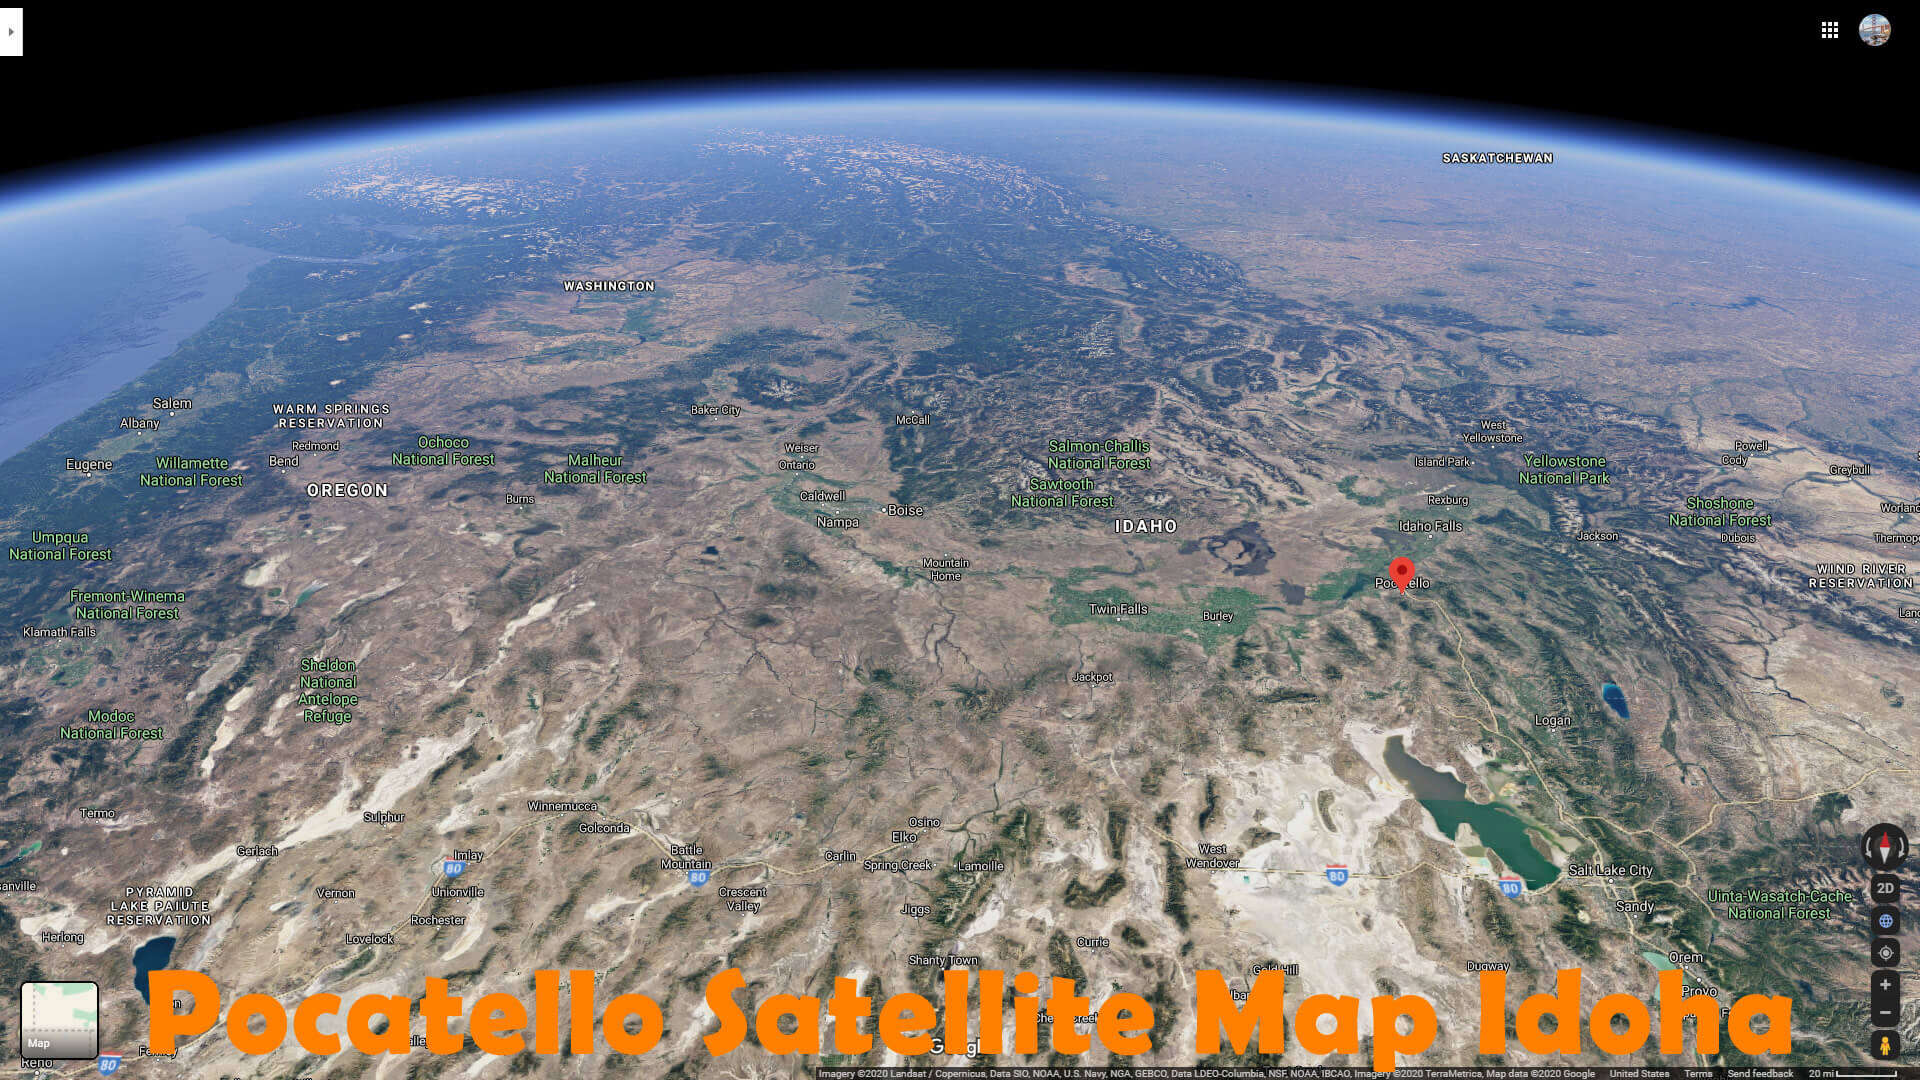 Pocatello Satellite Map Idoha